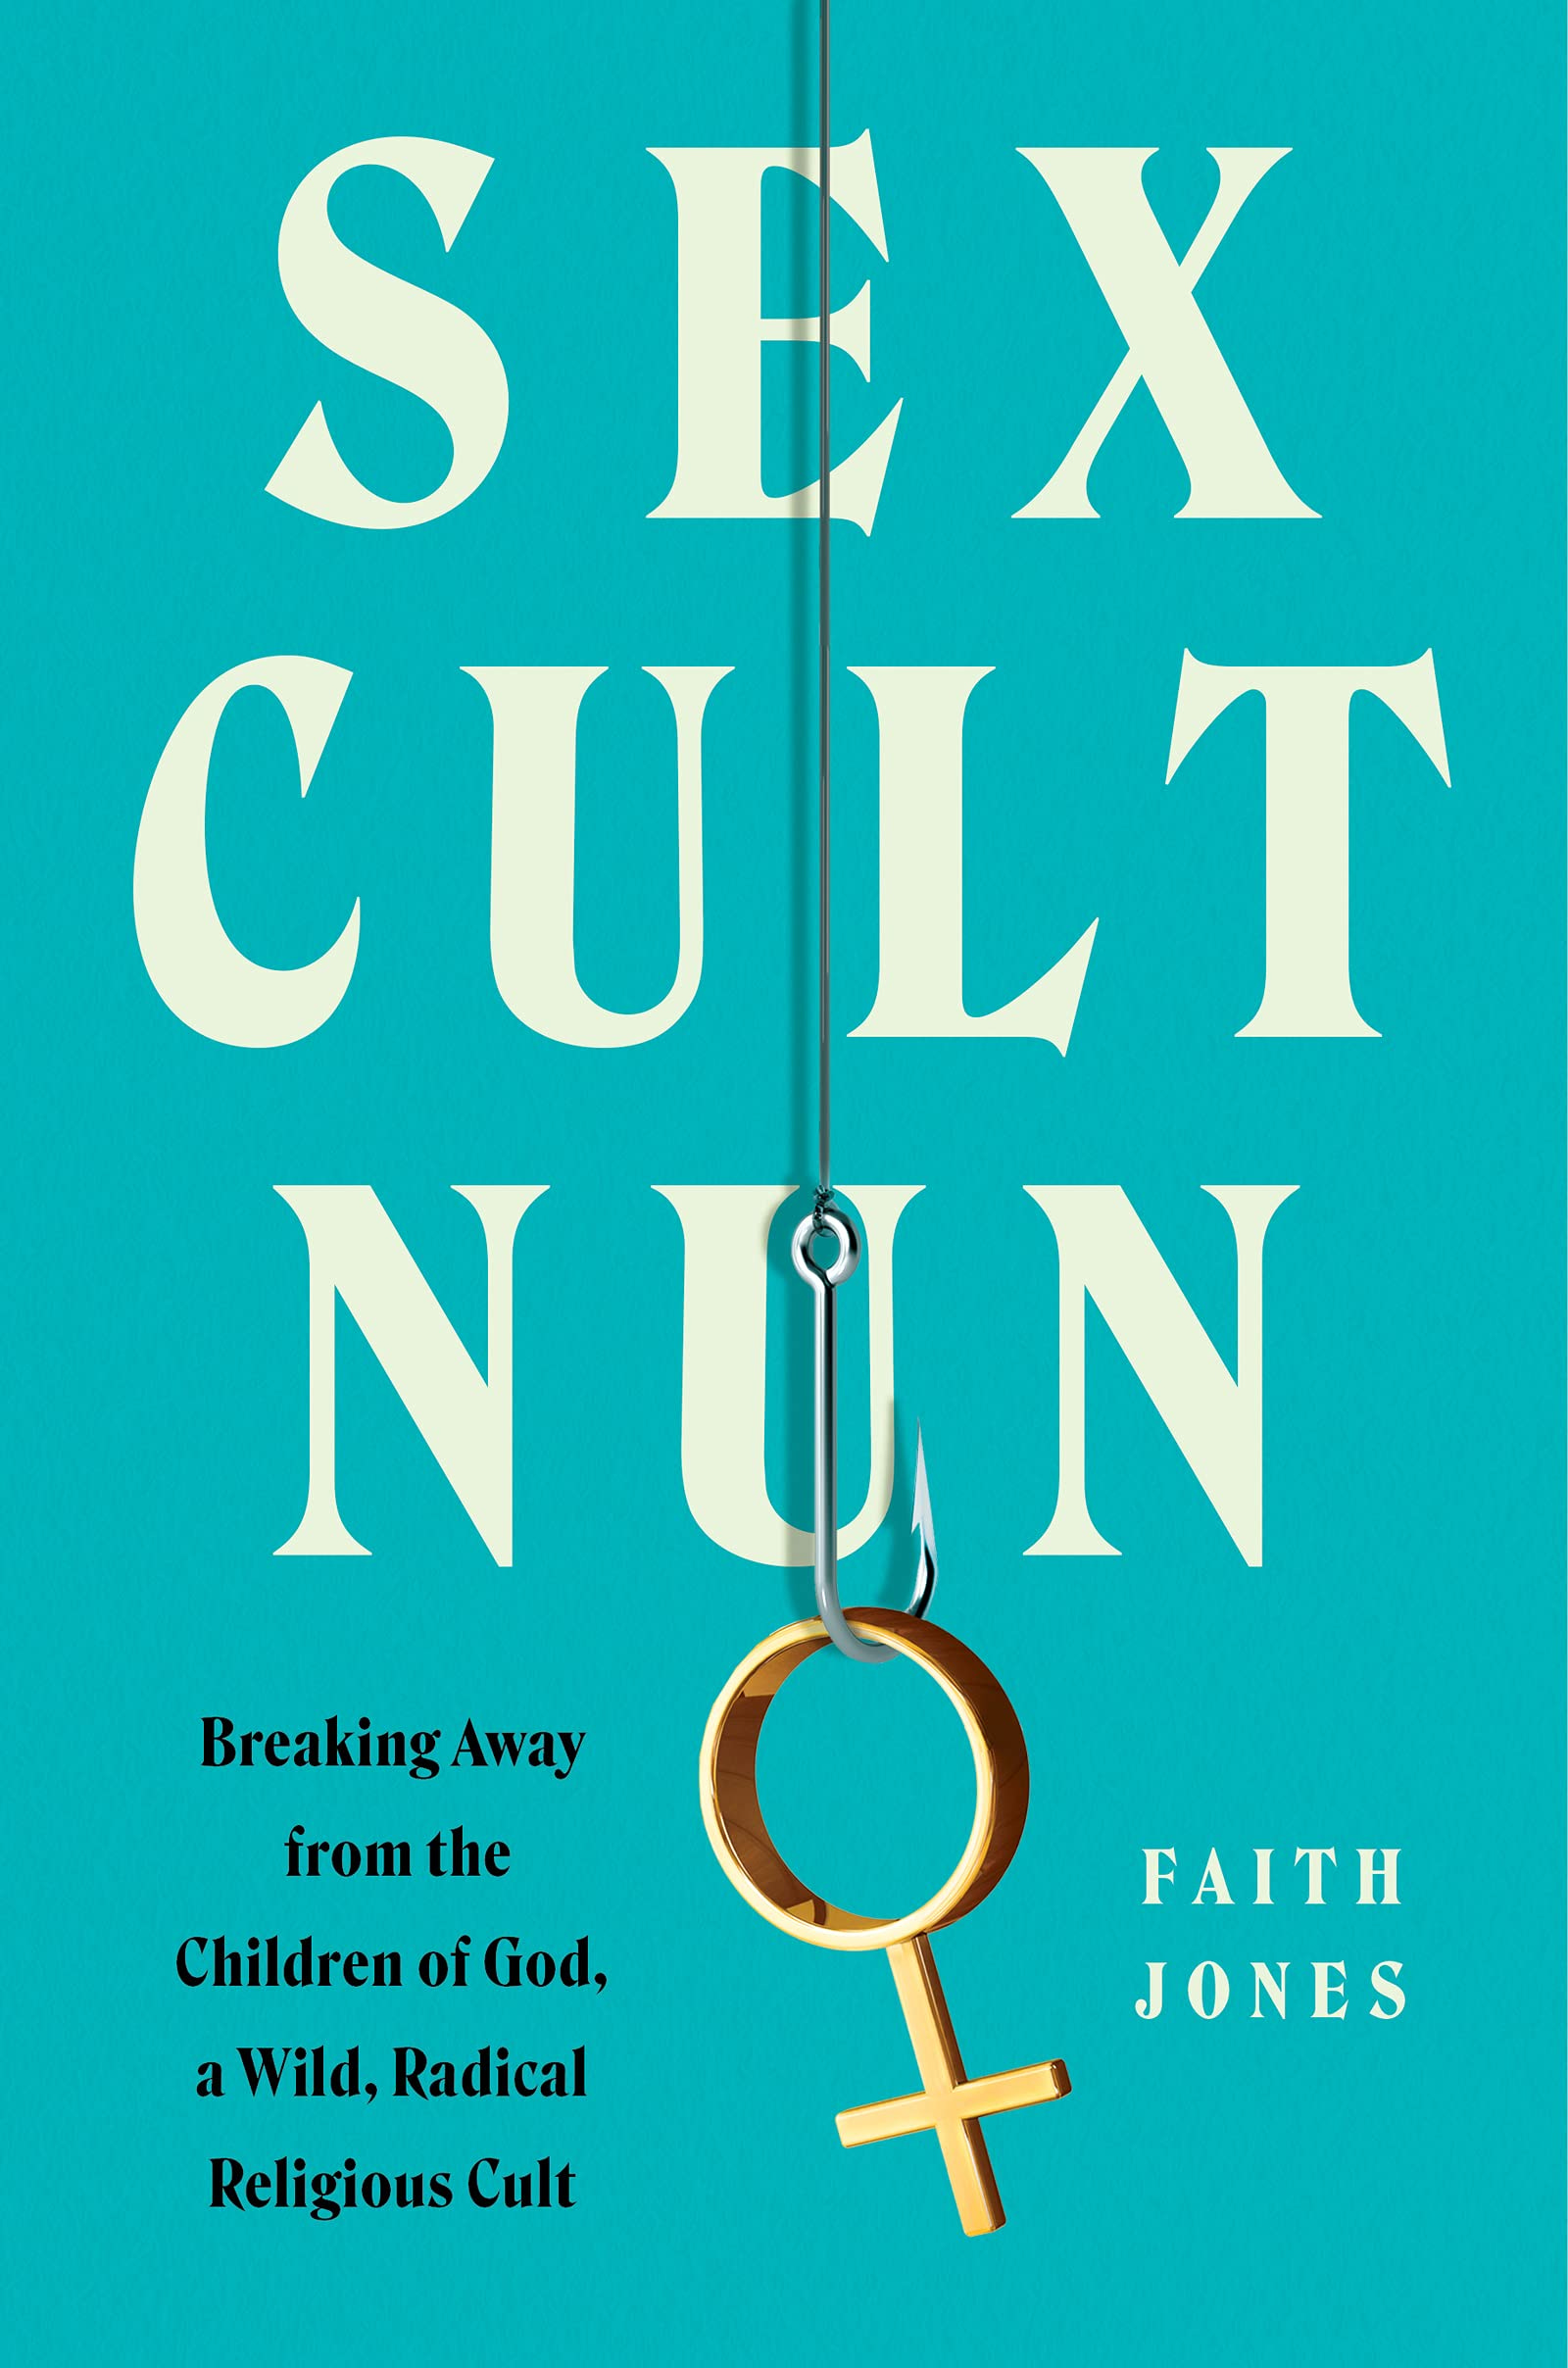 Sex, Cult, Nun - by Sophia Williams